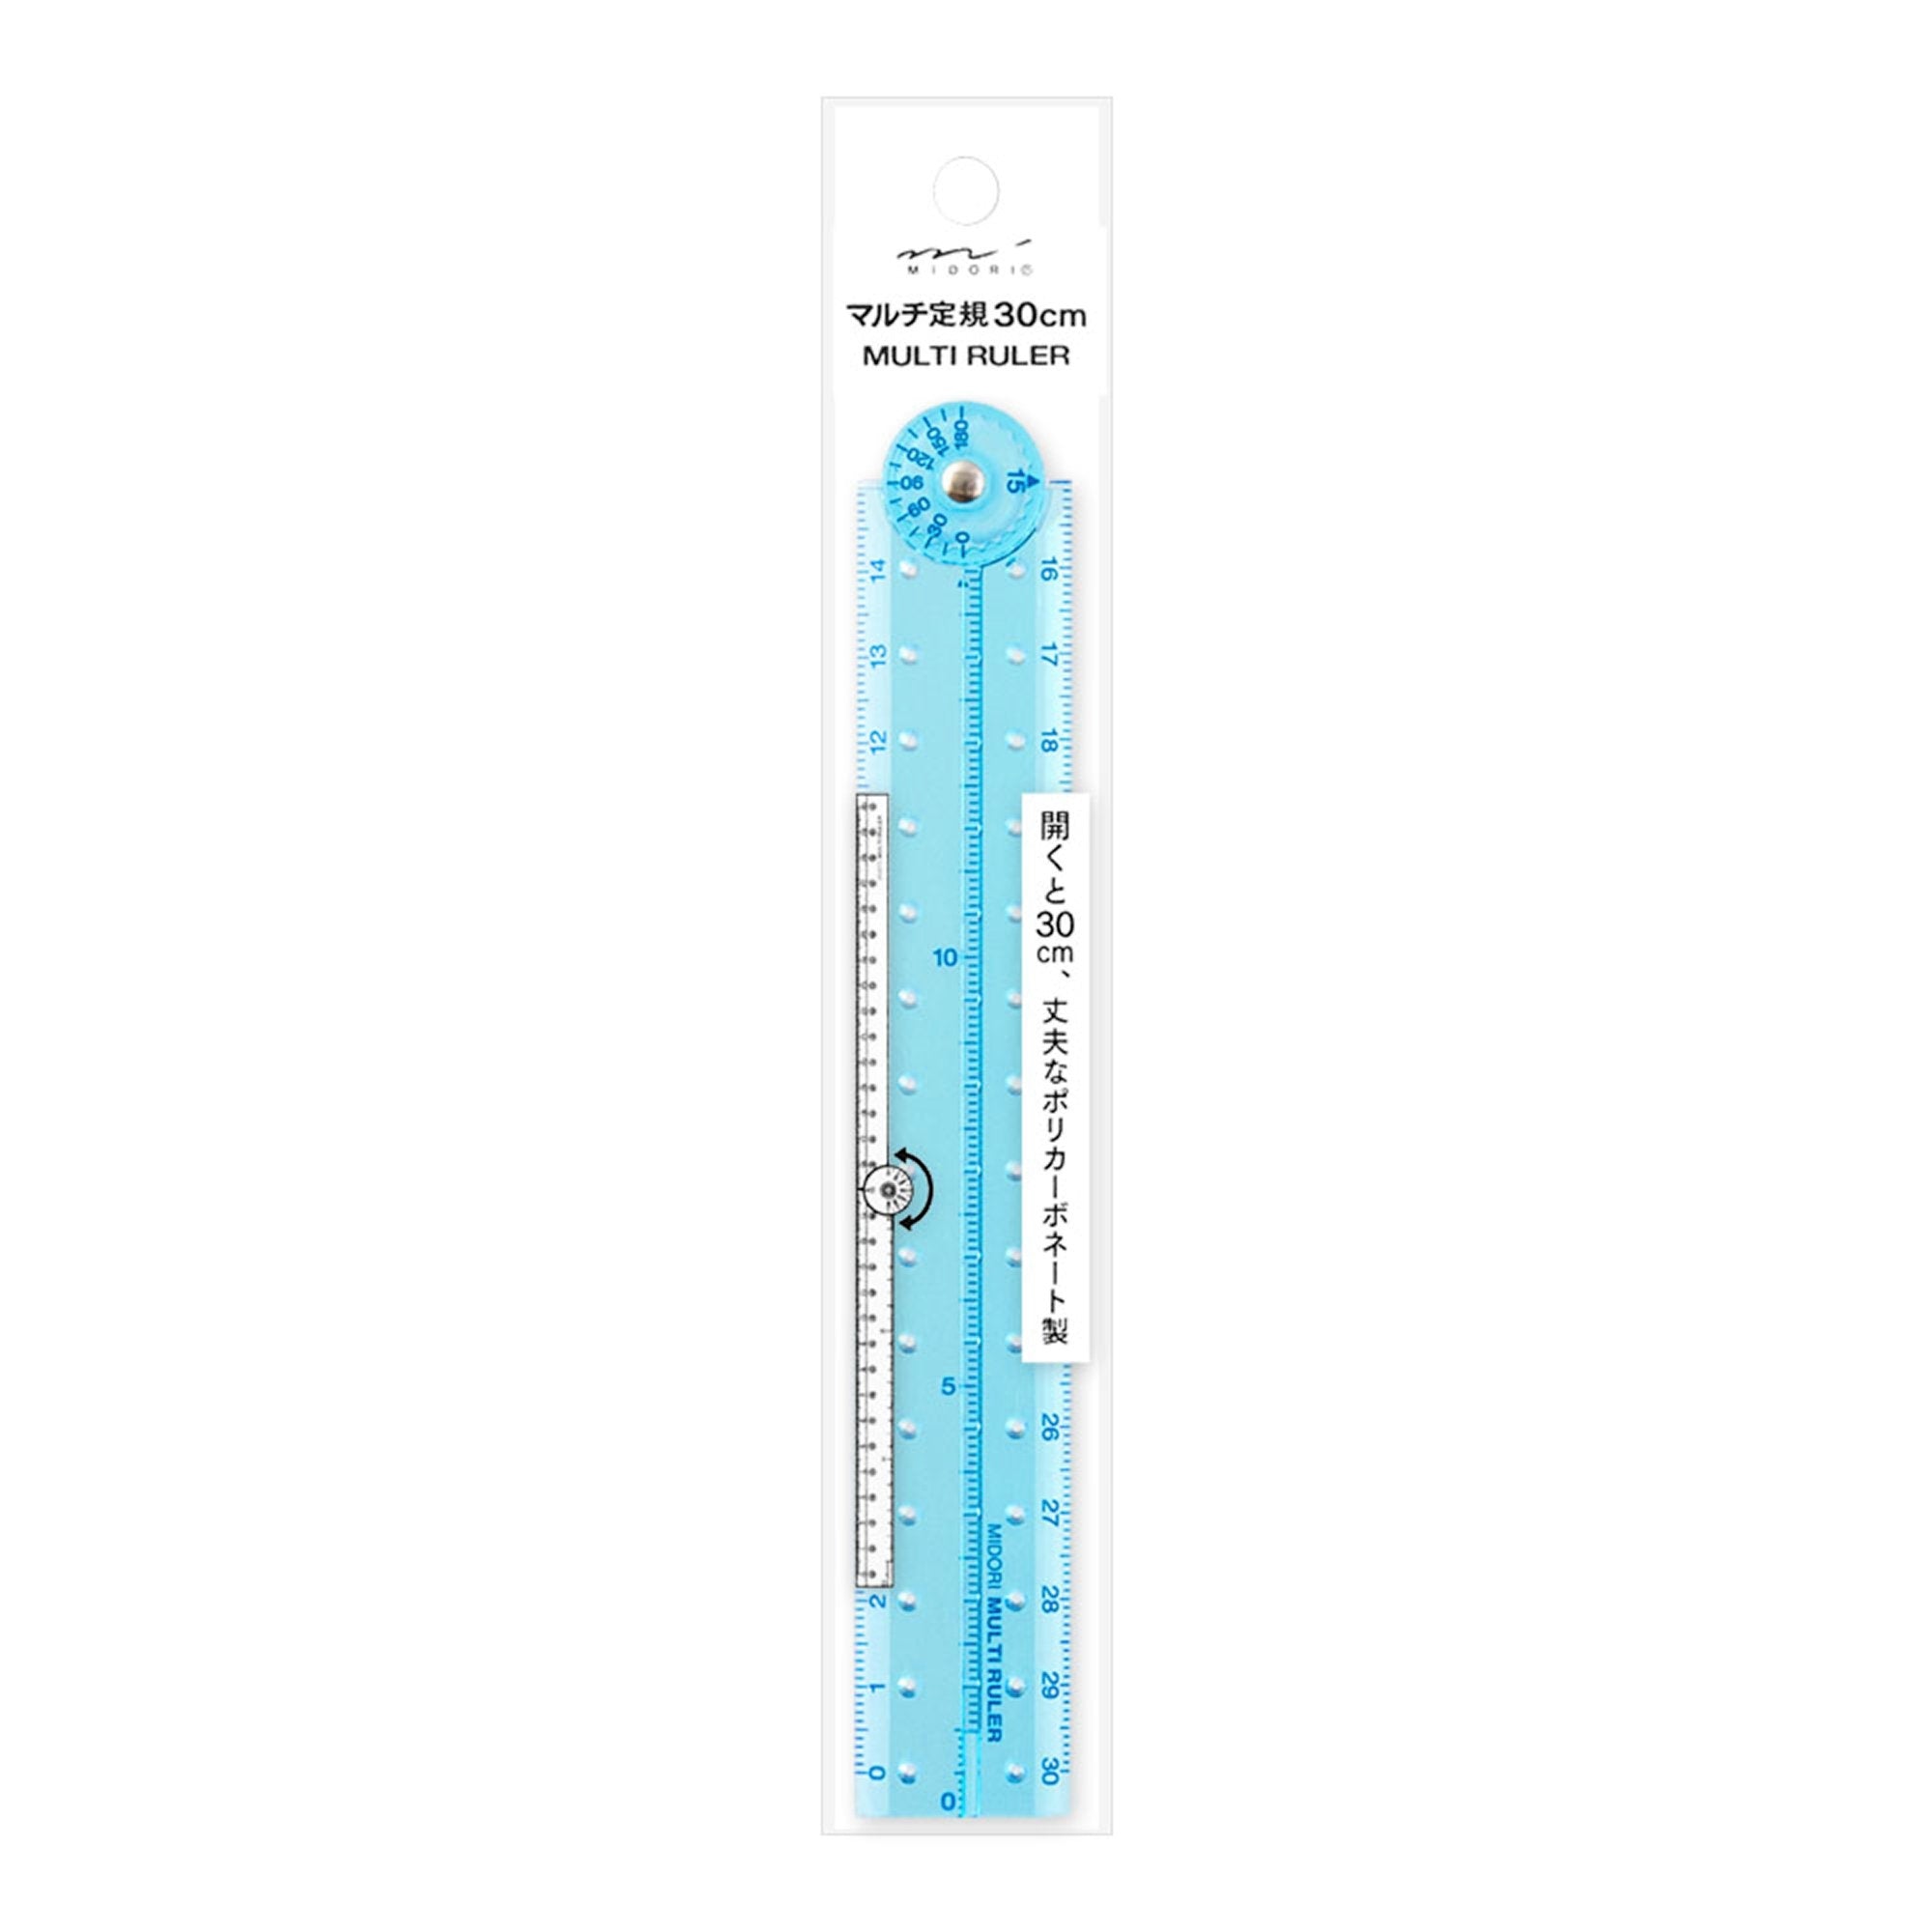 Midori Multi Ruler - 30 cm, Blue